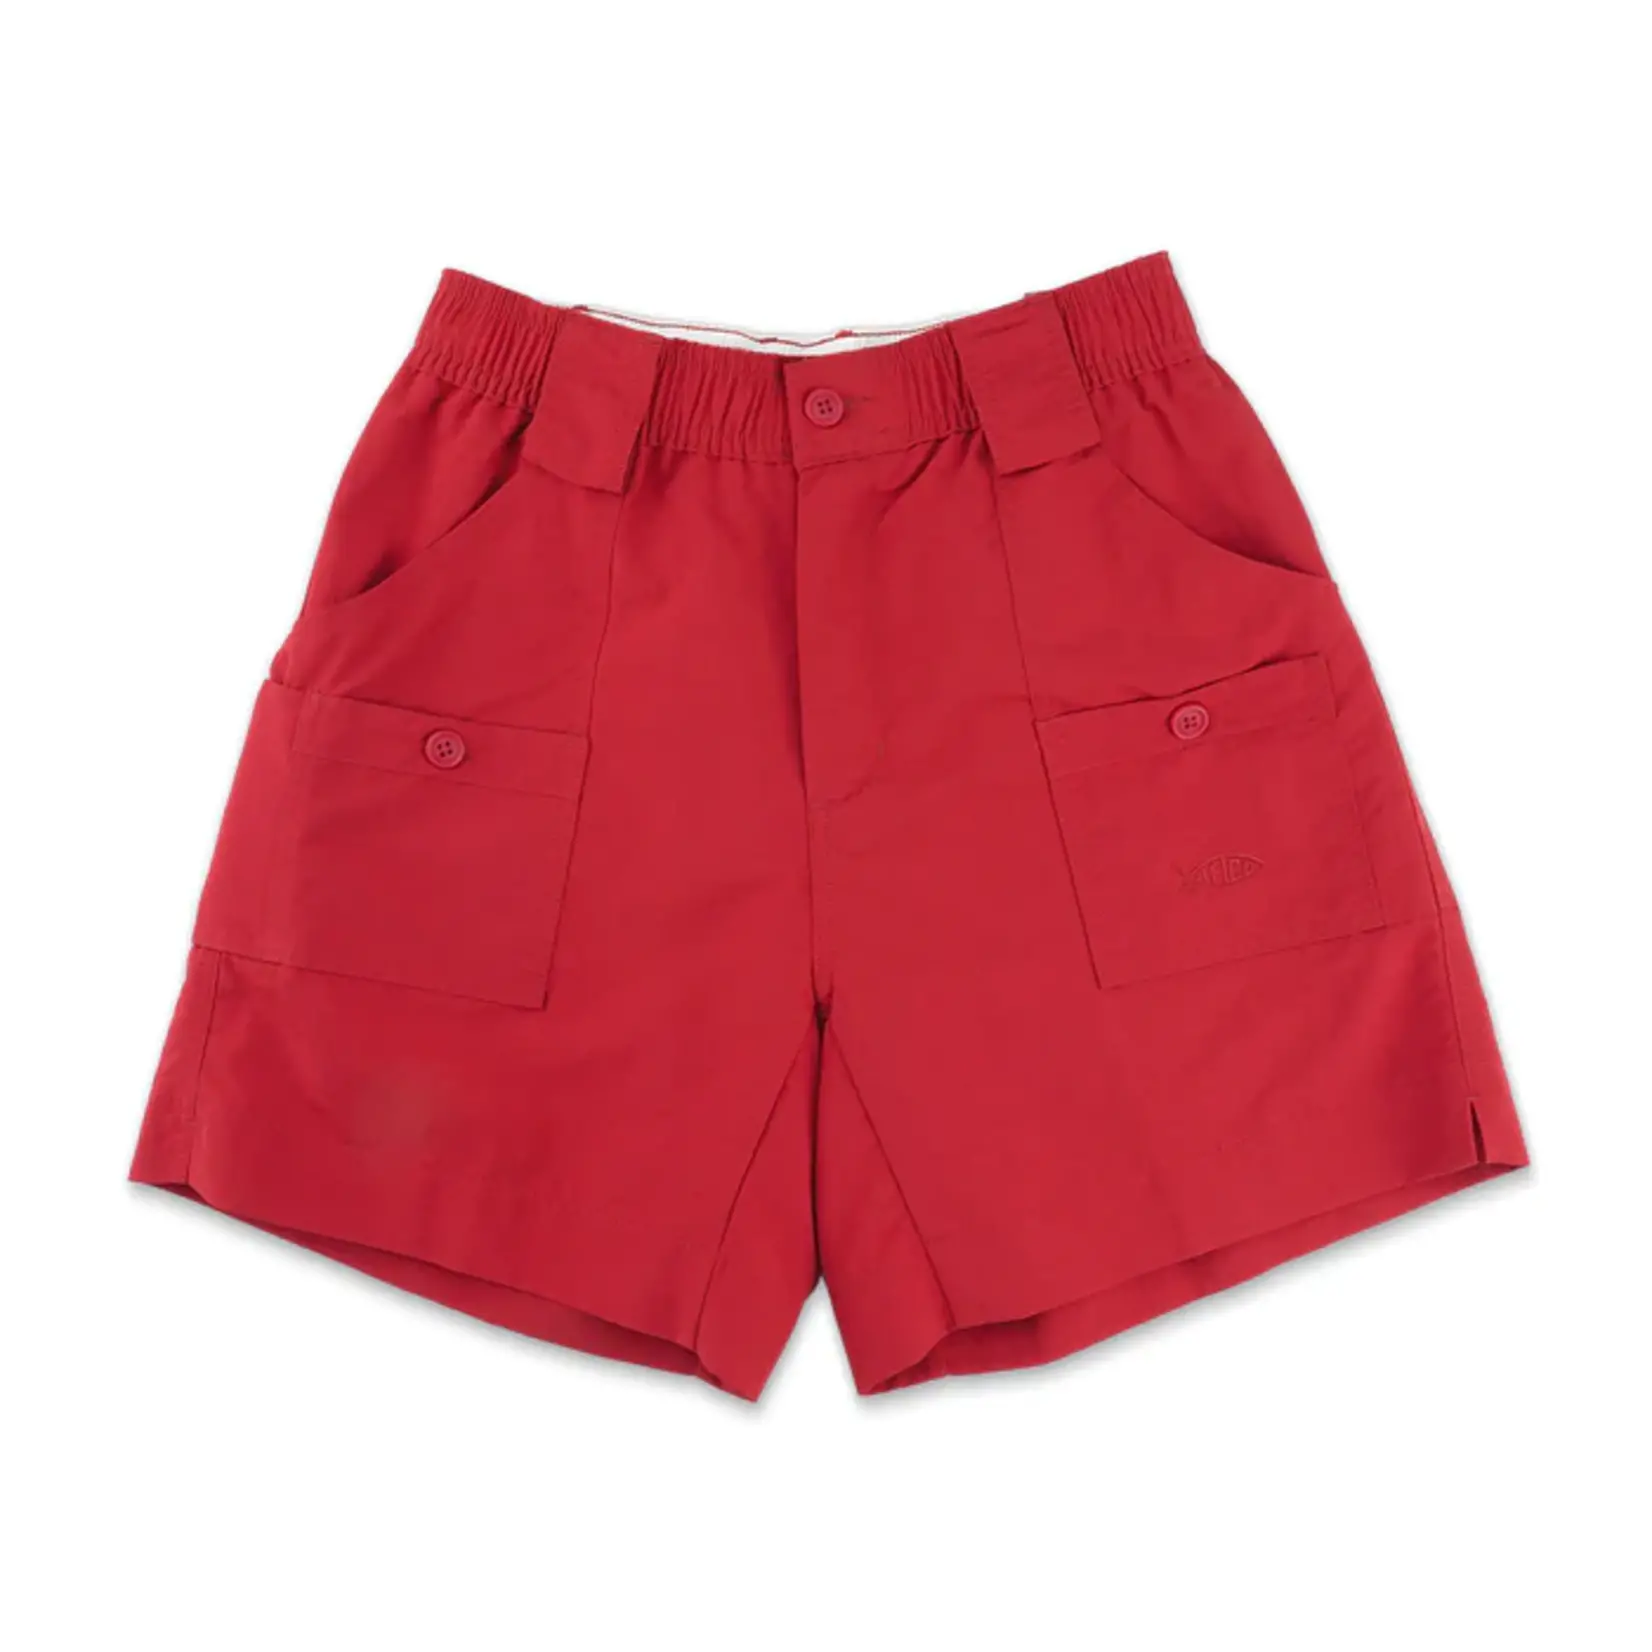 https://cdn.shoplightspeed.com/shops/648151/files/61890549/1652x1652x2/aftco-aftco-b01-youth-boys-original-fishing-shorts.jpg